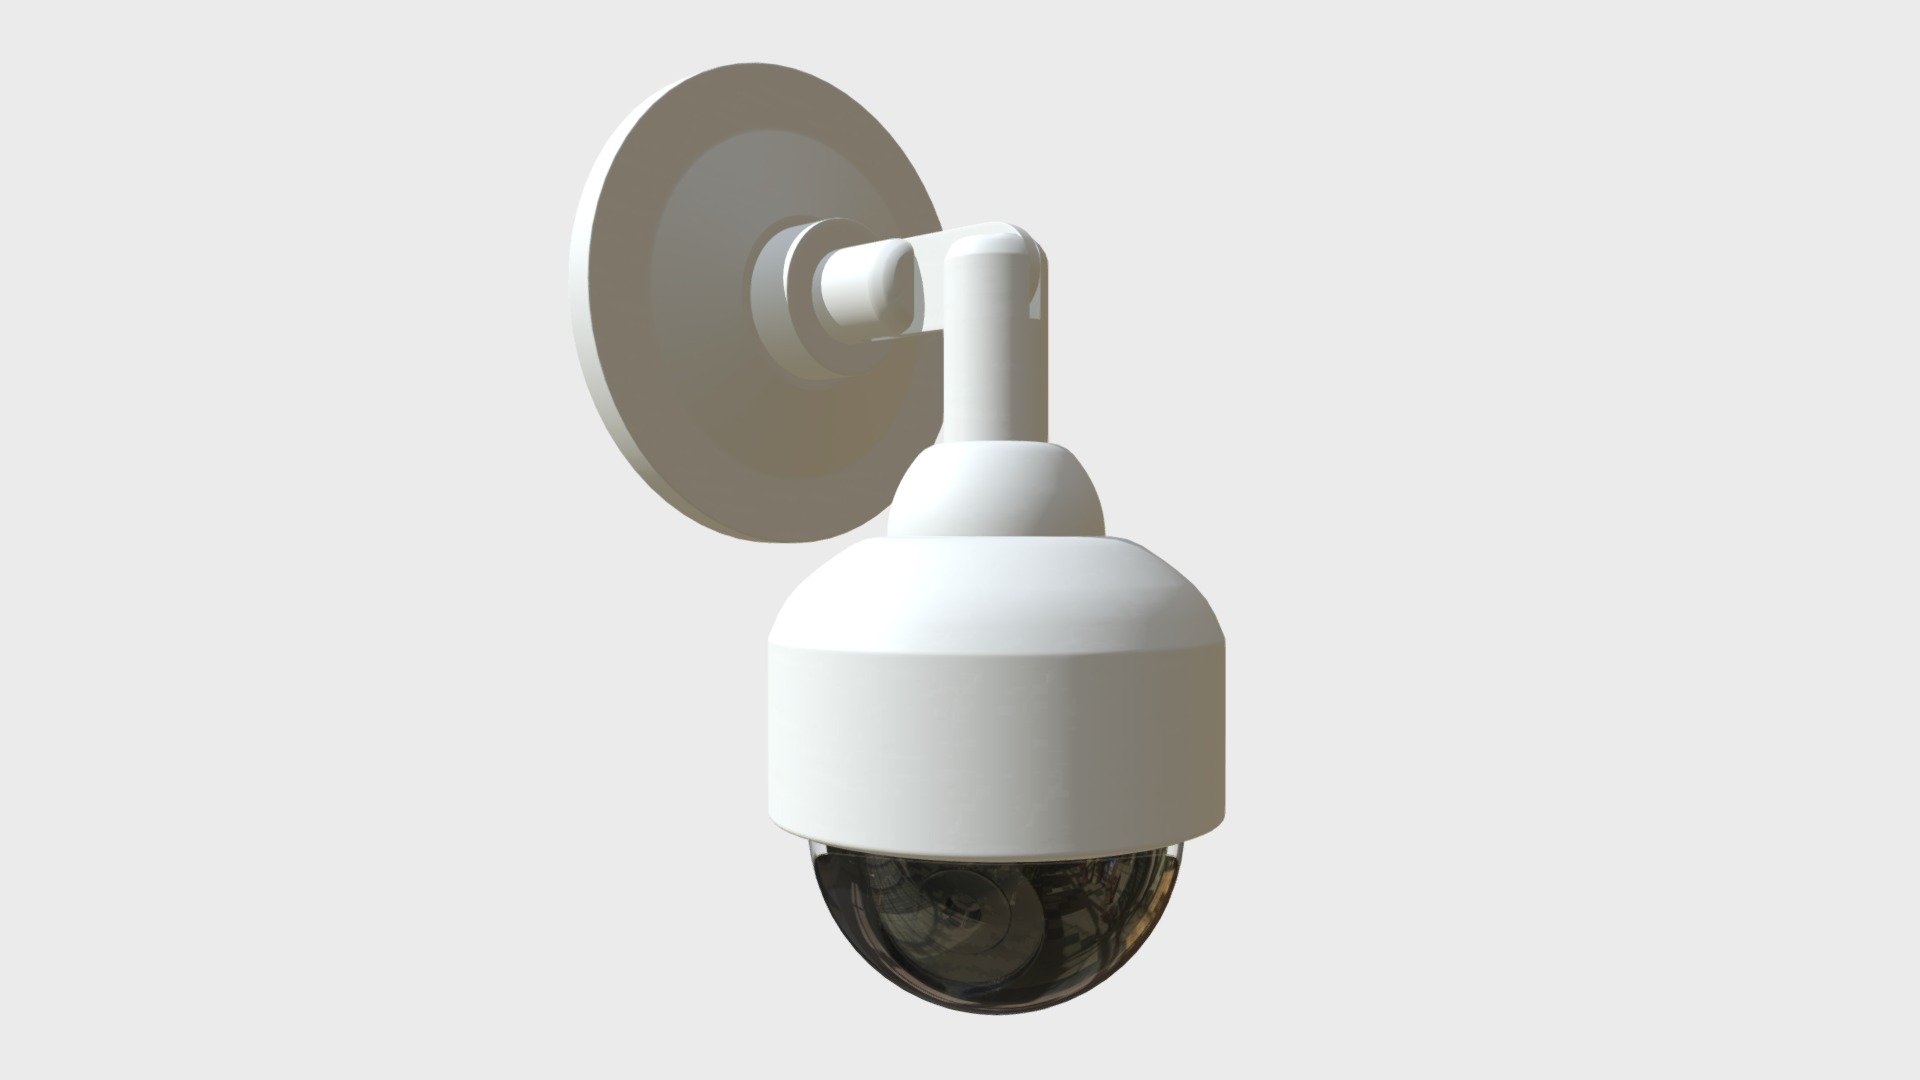 Wall mounted dome surveillance camera